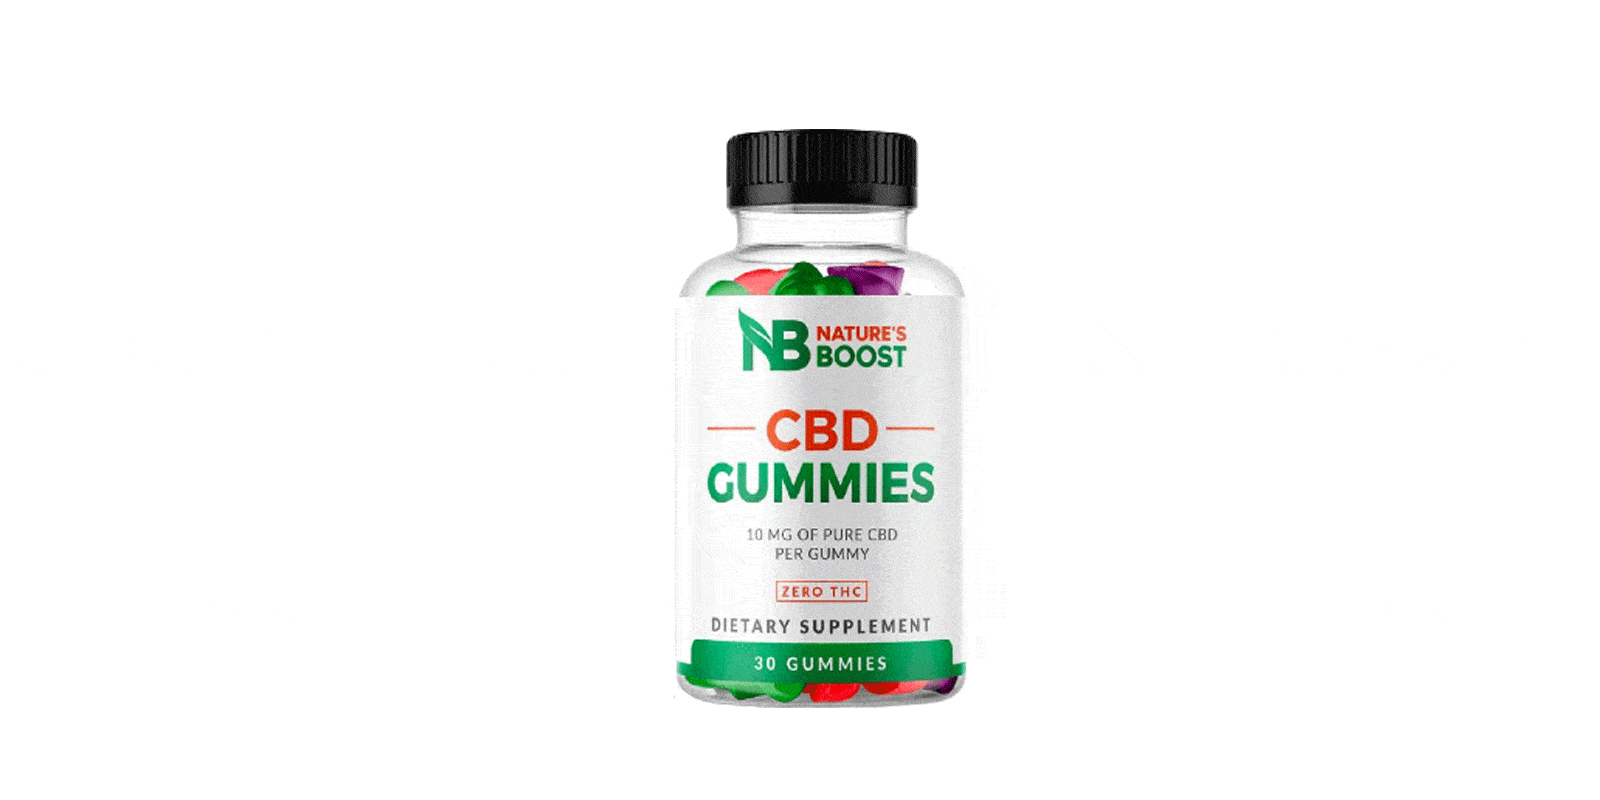 Nature’s Boost CBD Gummies Reviews